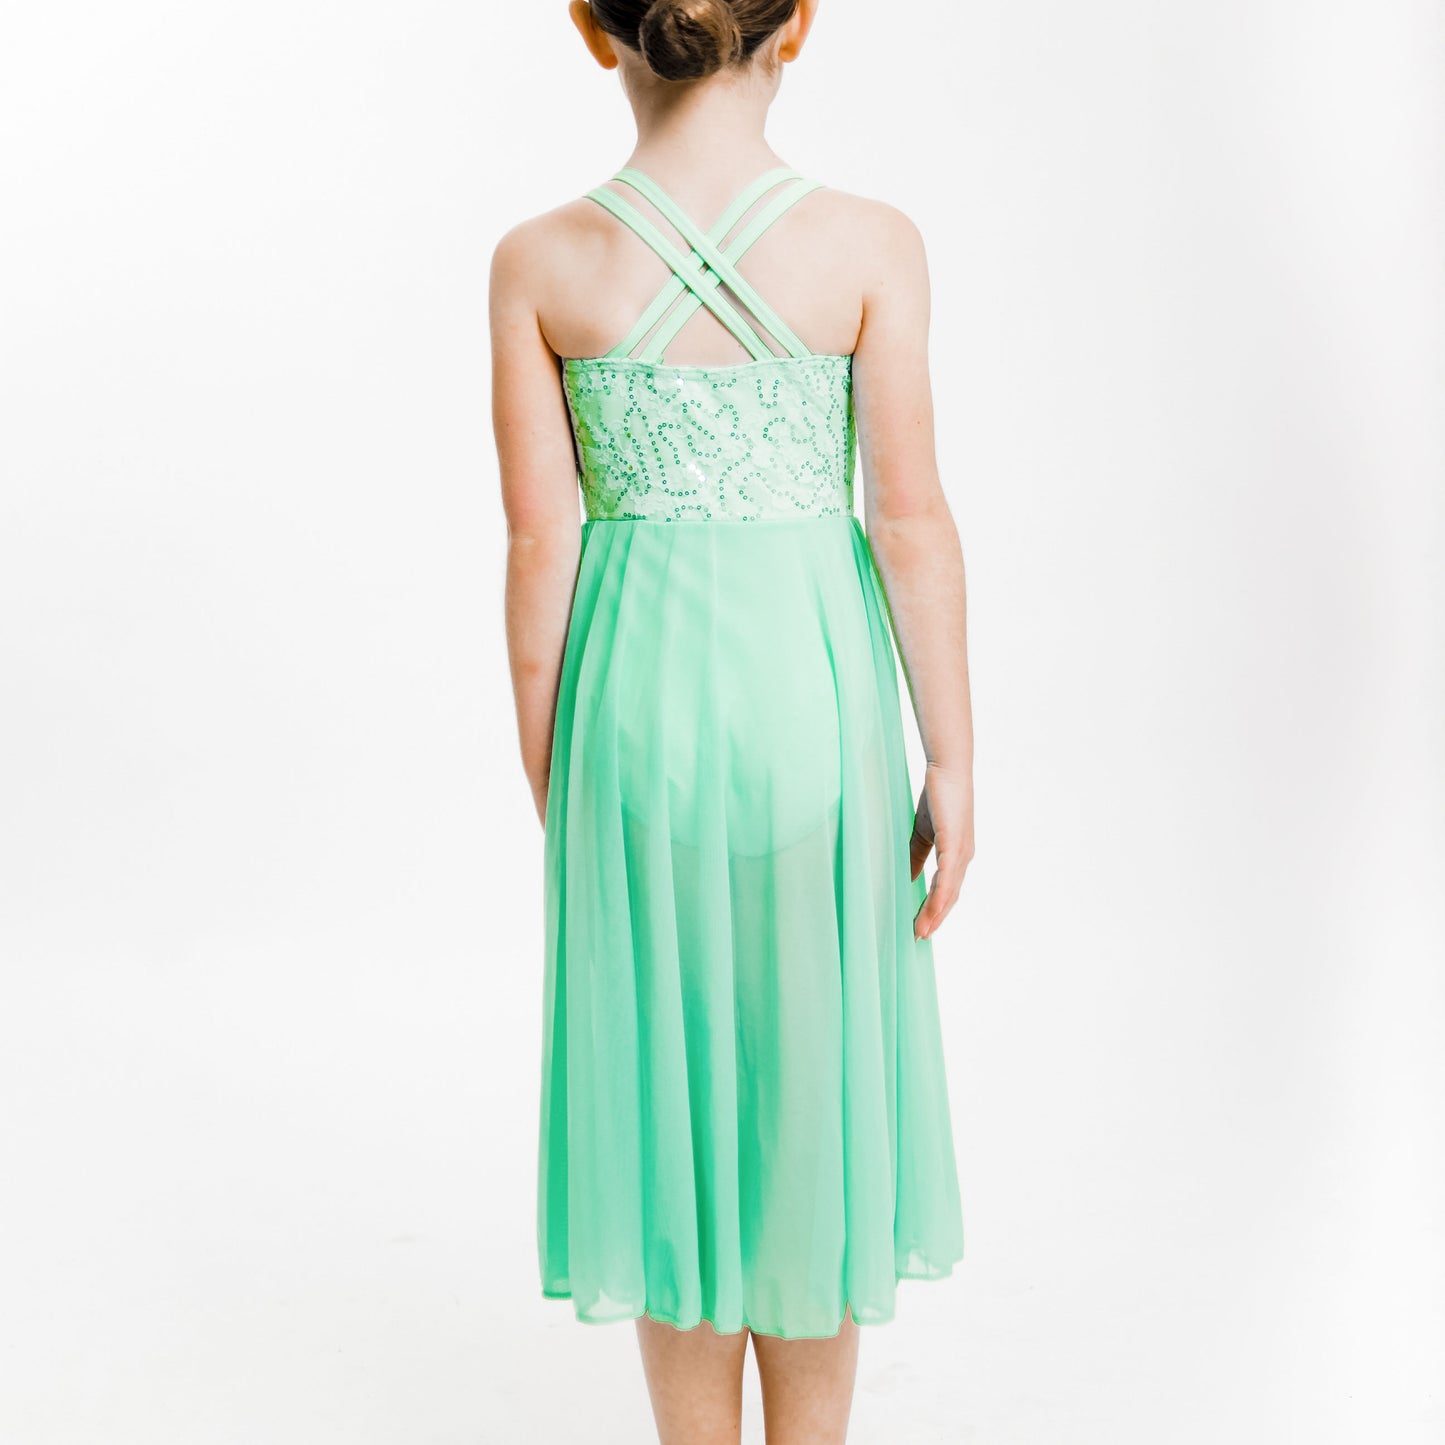 Charlotte Mint Sequin Cross Back Lyrical Dress | Lyrical Dance Costume